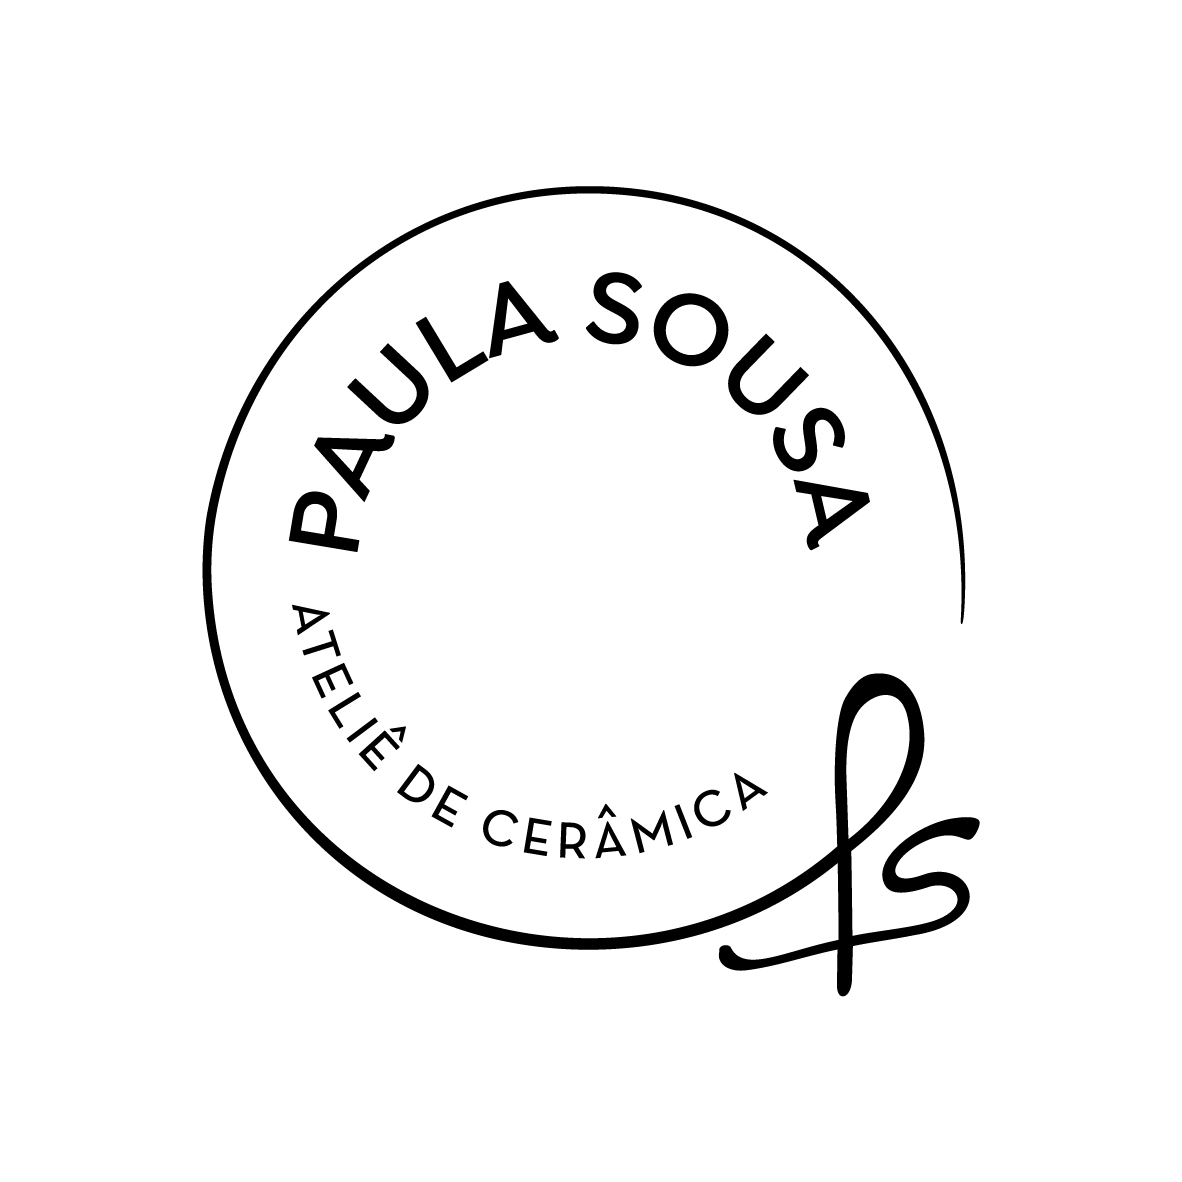 PAULA SOUSA